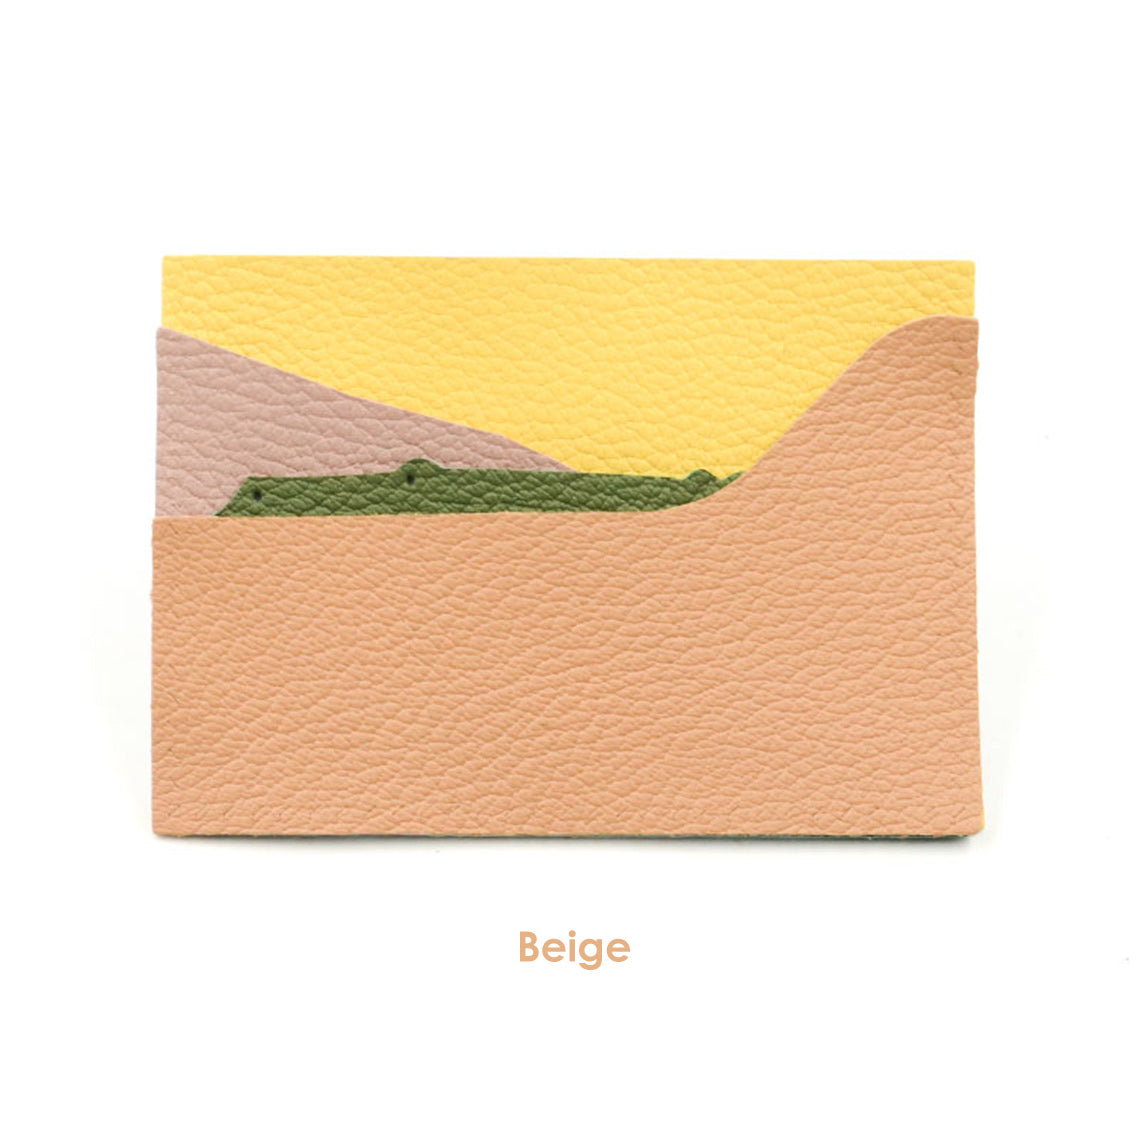 Beige leather card wallet | Simple DIY card holder | POPSEWING™